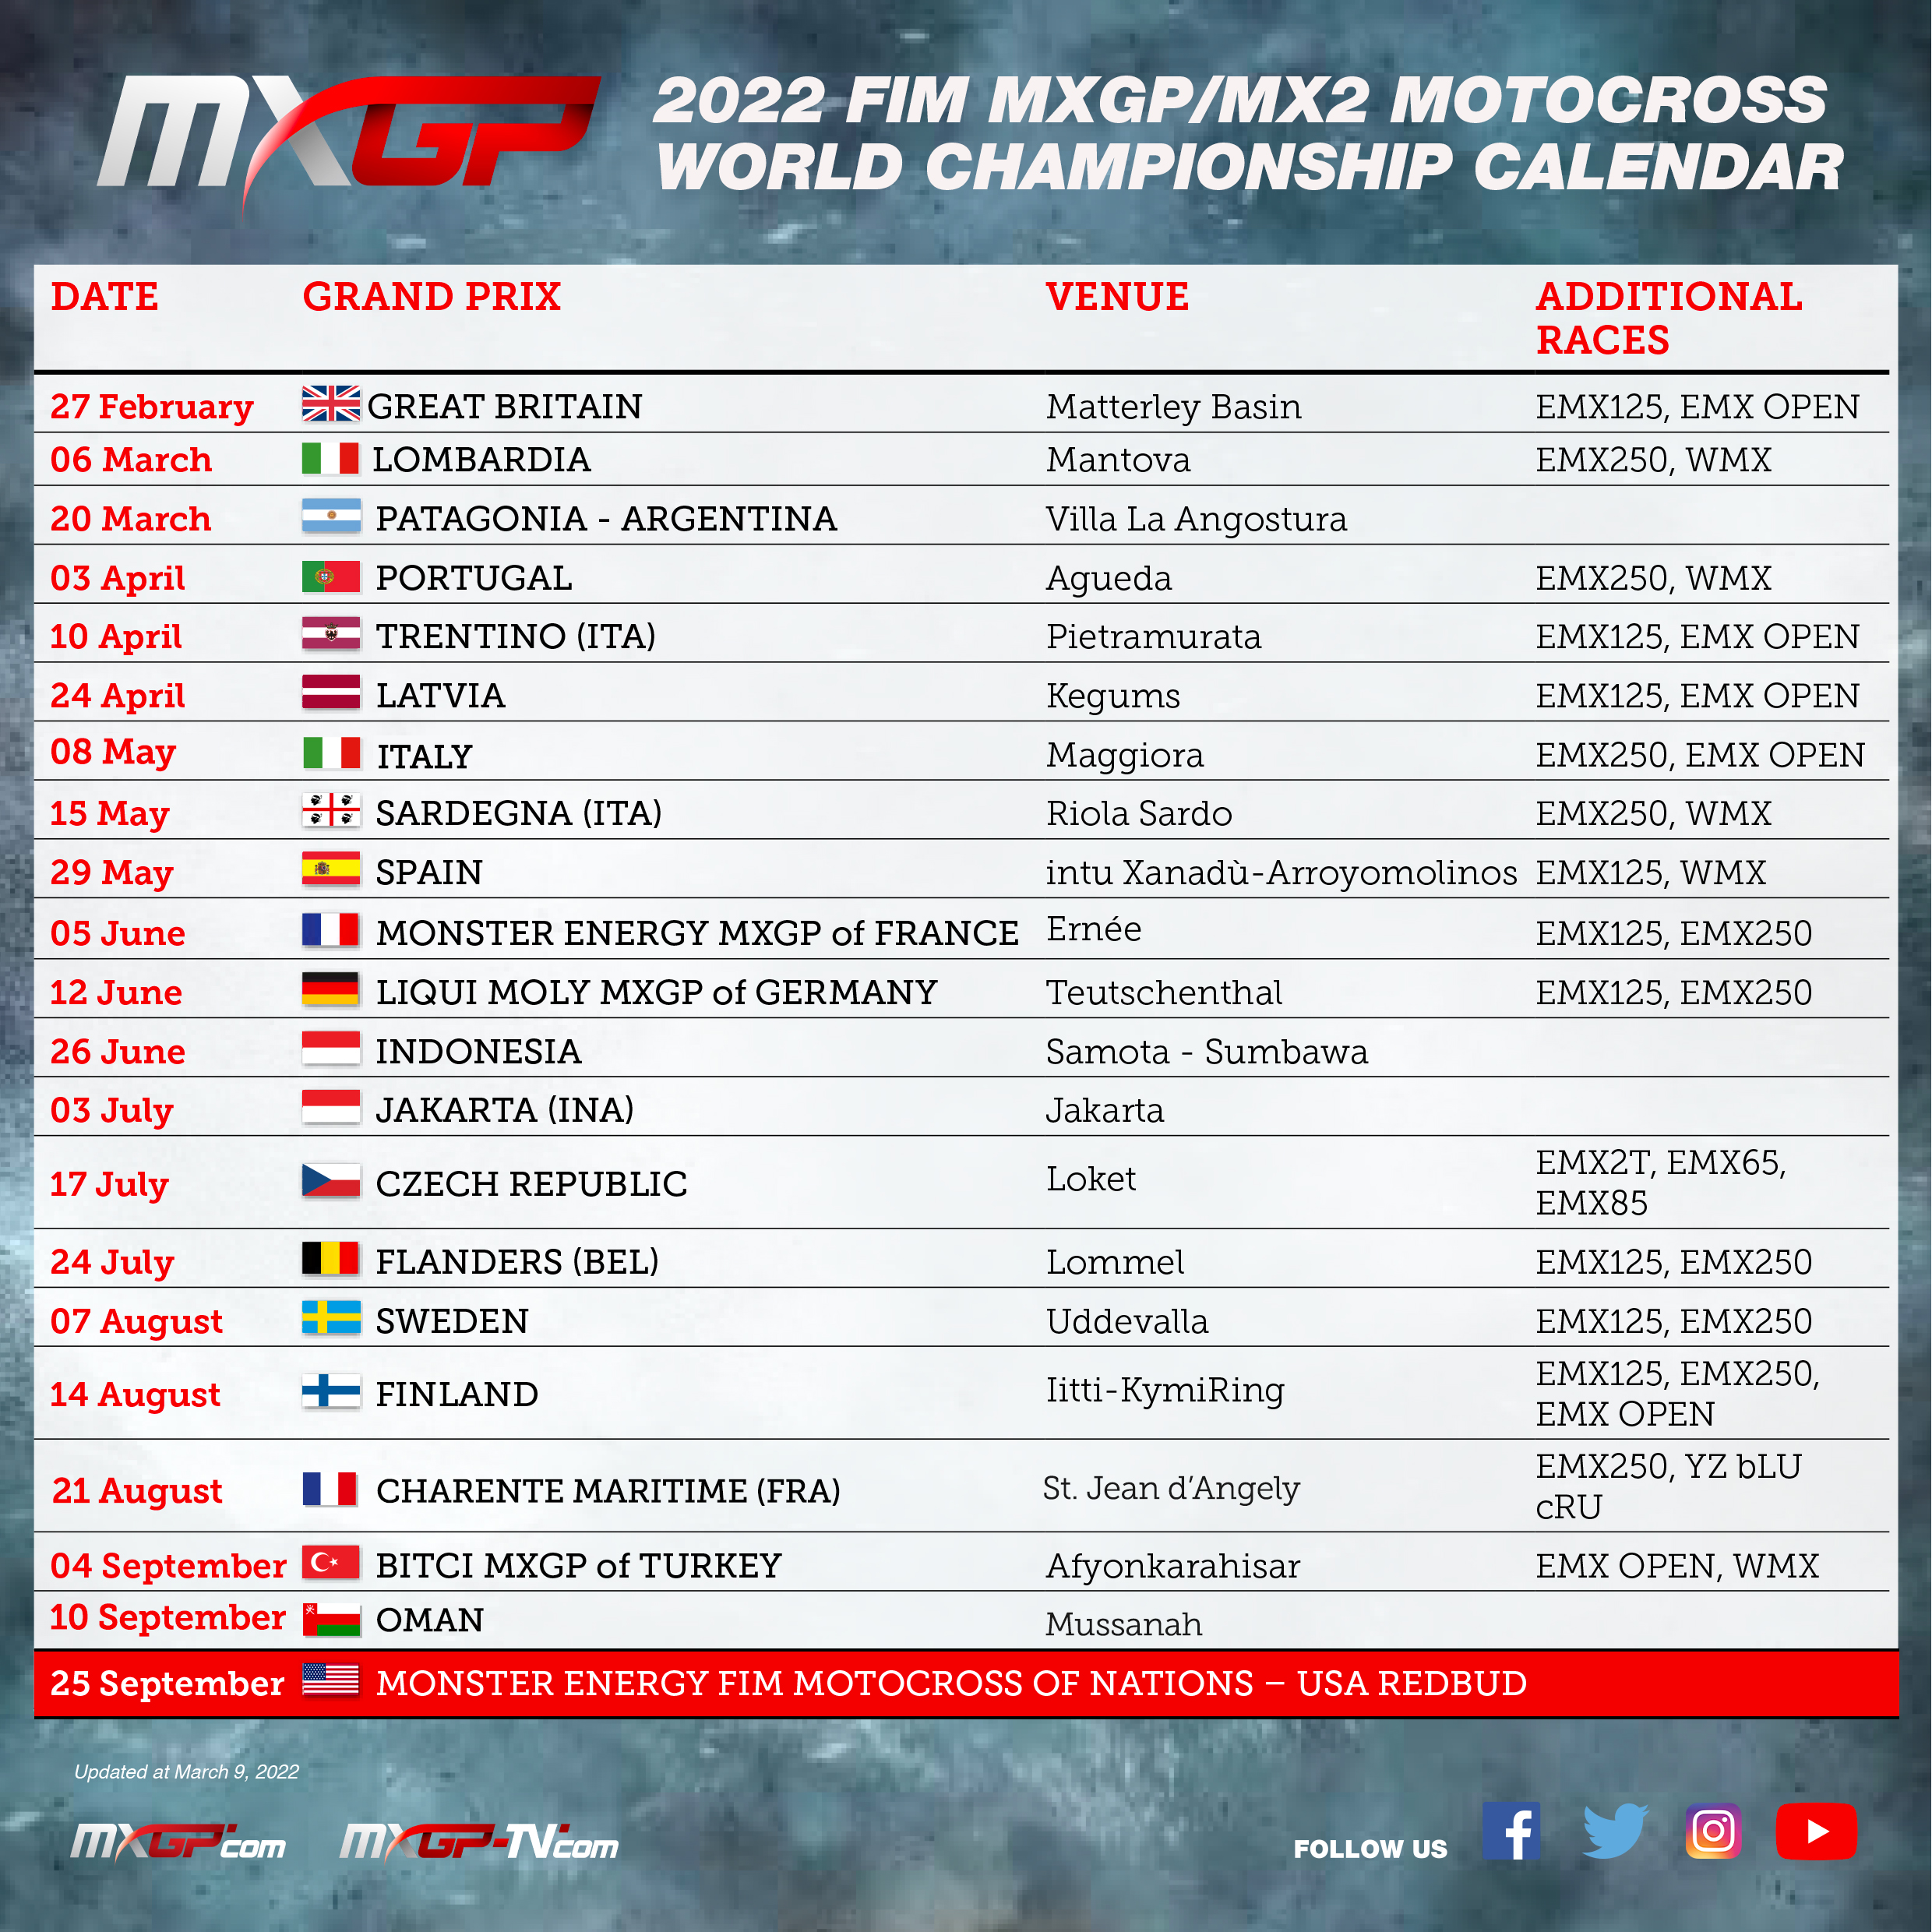 Motogp calendar 2022